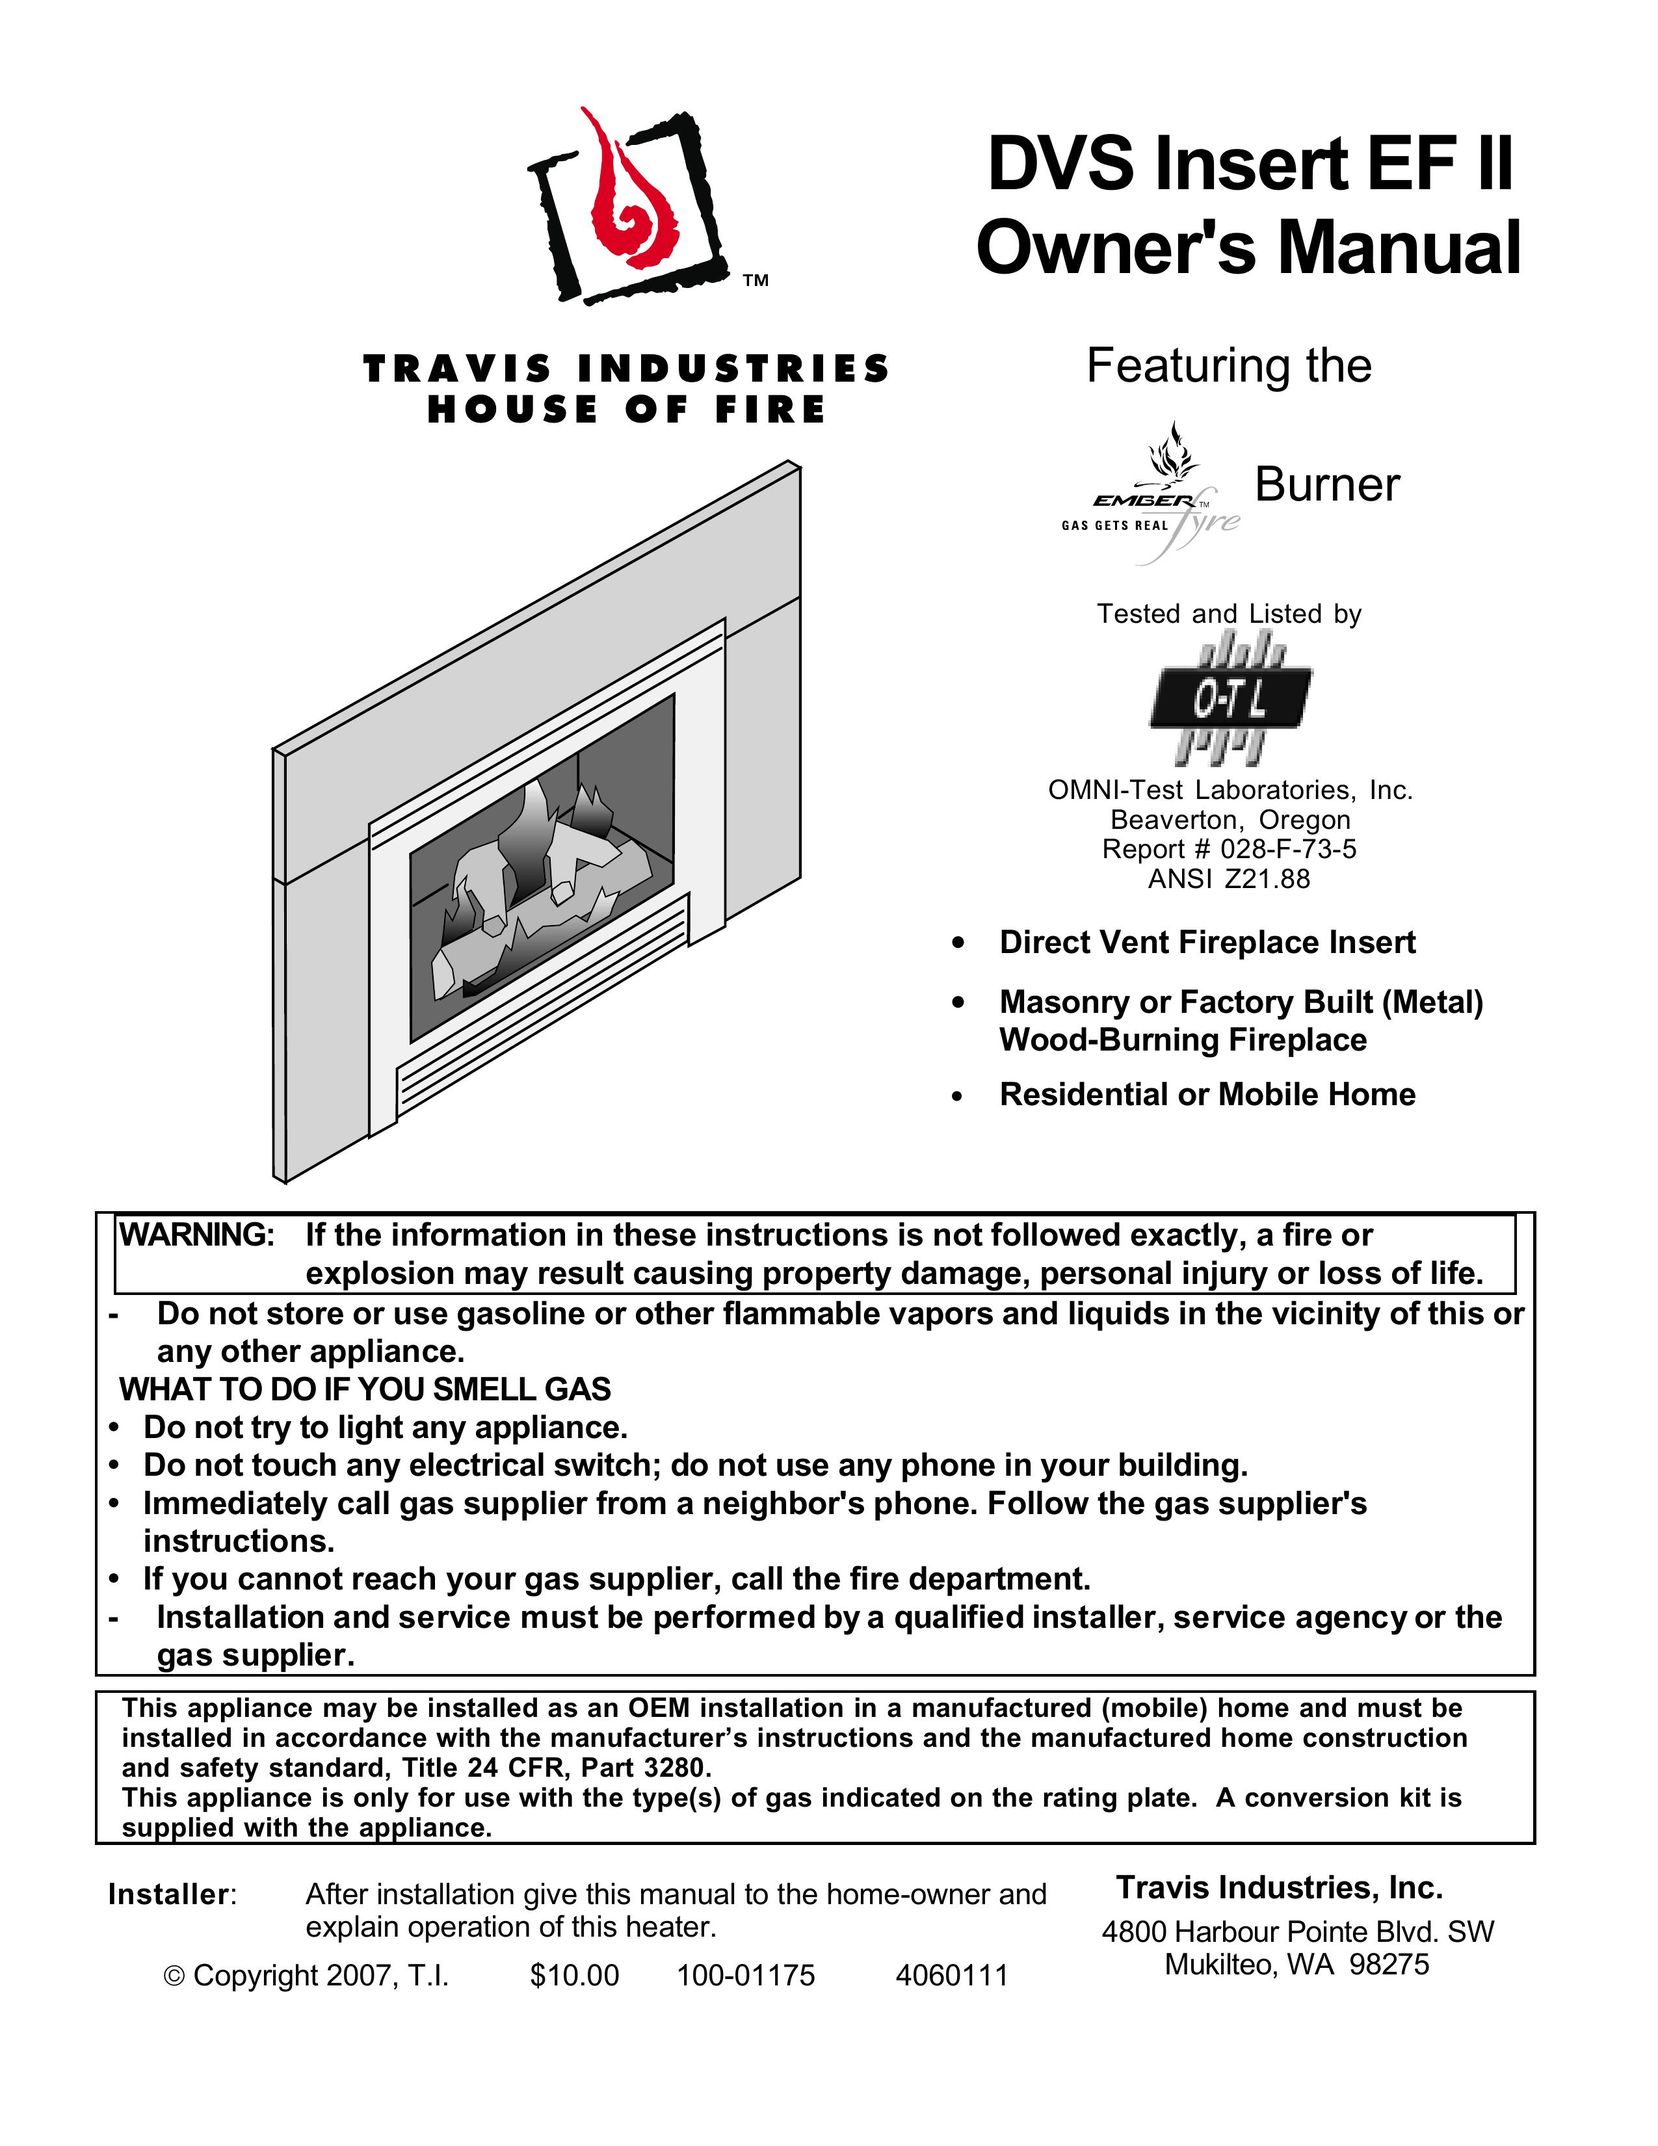 Avalon Stoves DVS Insert EF II Indoor Fireplace User Manual